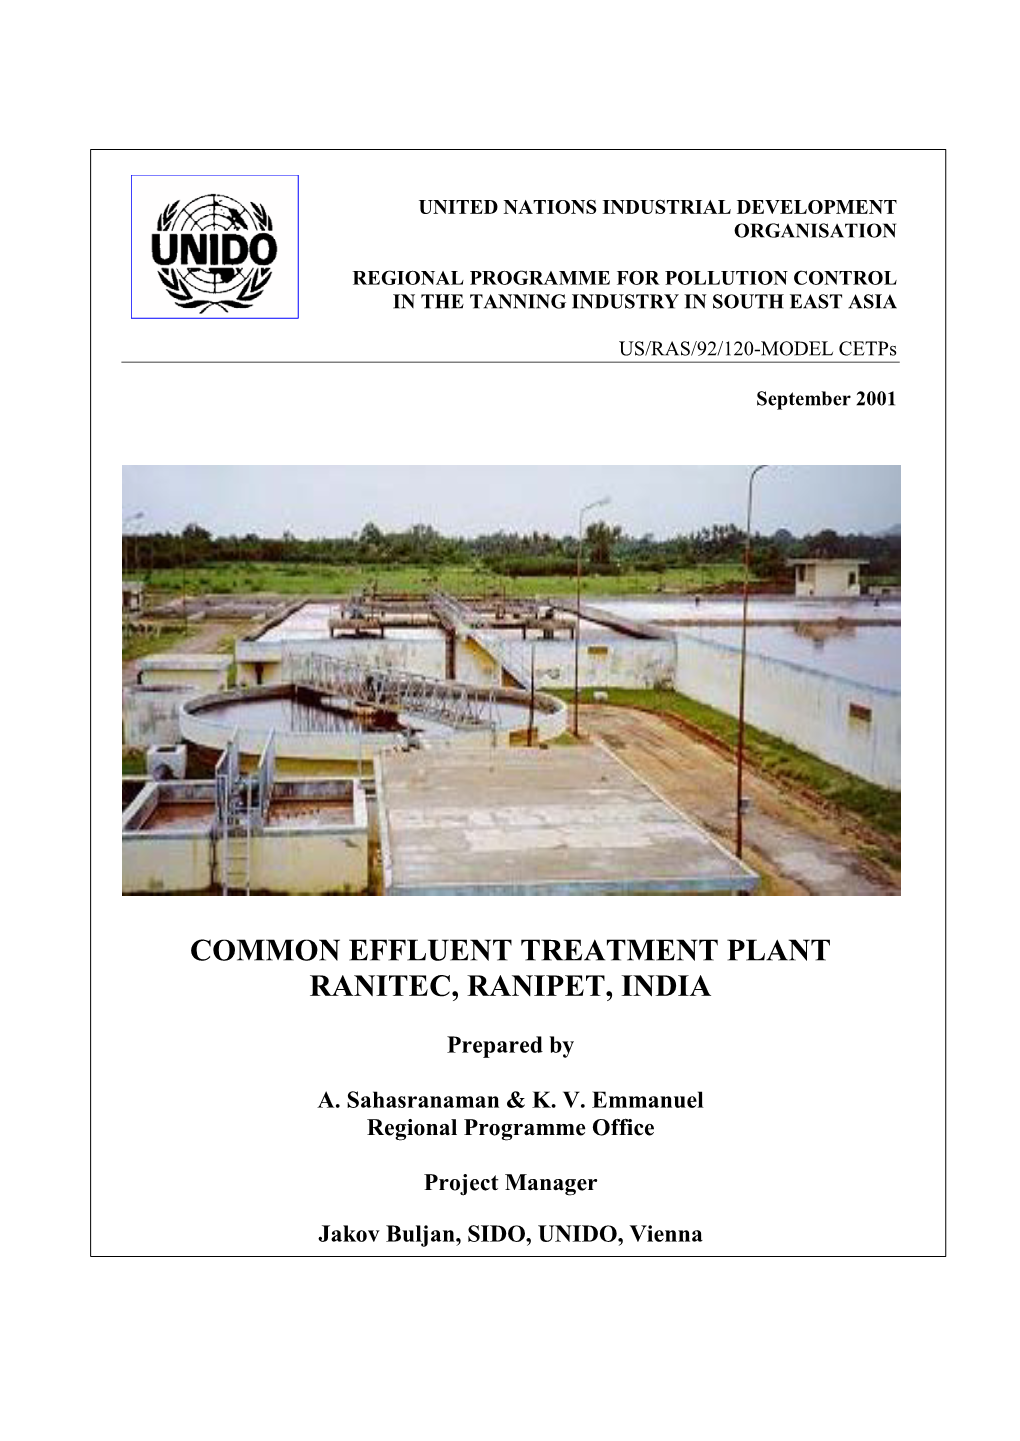 Common Effluent Treatment Plant Ranitec, Ranipet, India